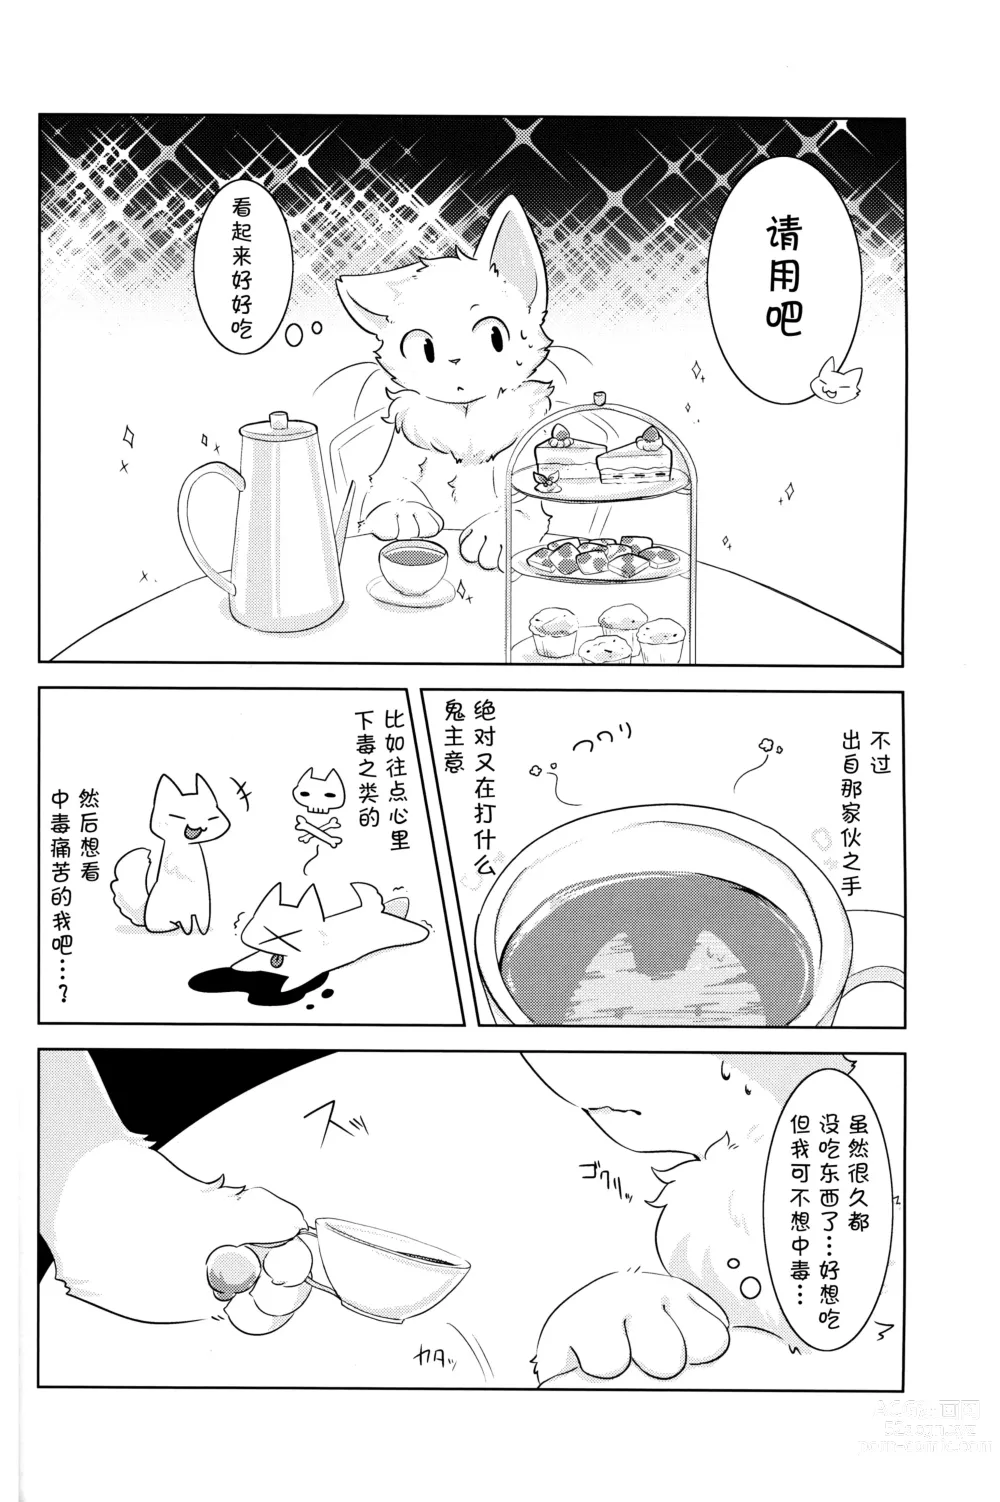 Page 13 of doujinshi 啊啊，亲爱的不死猫